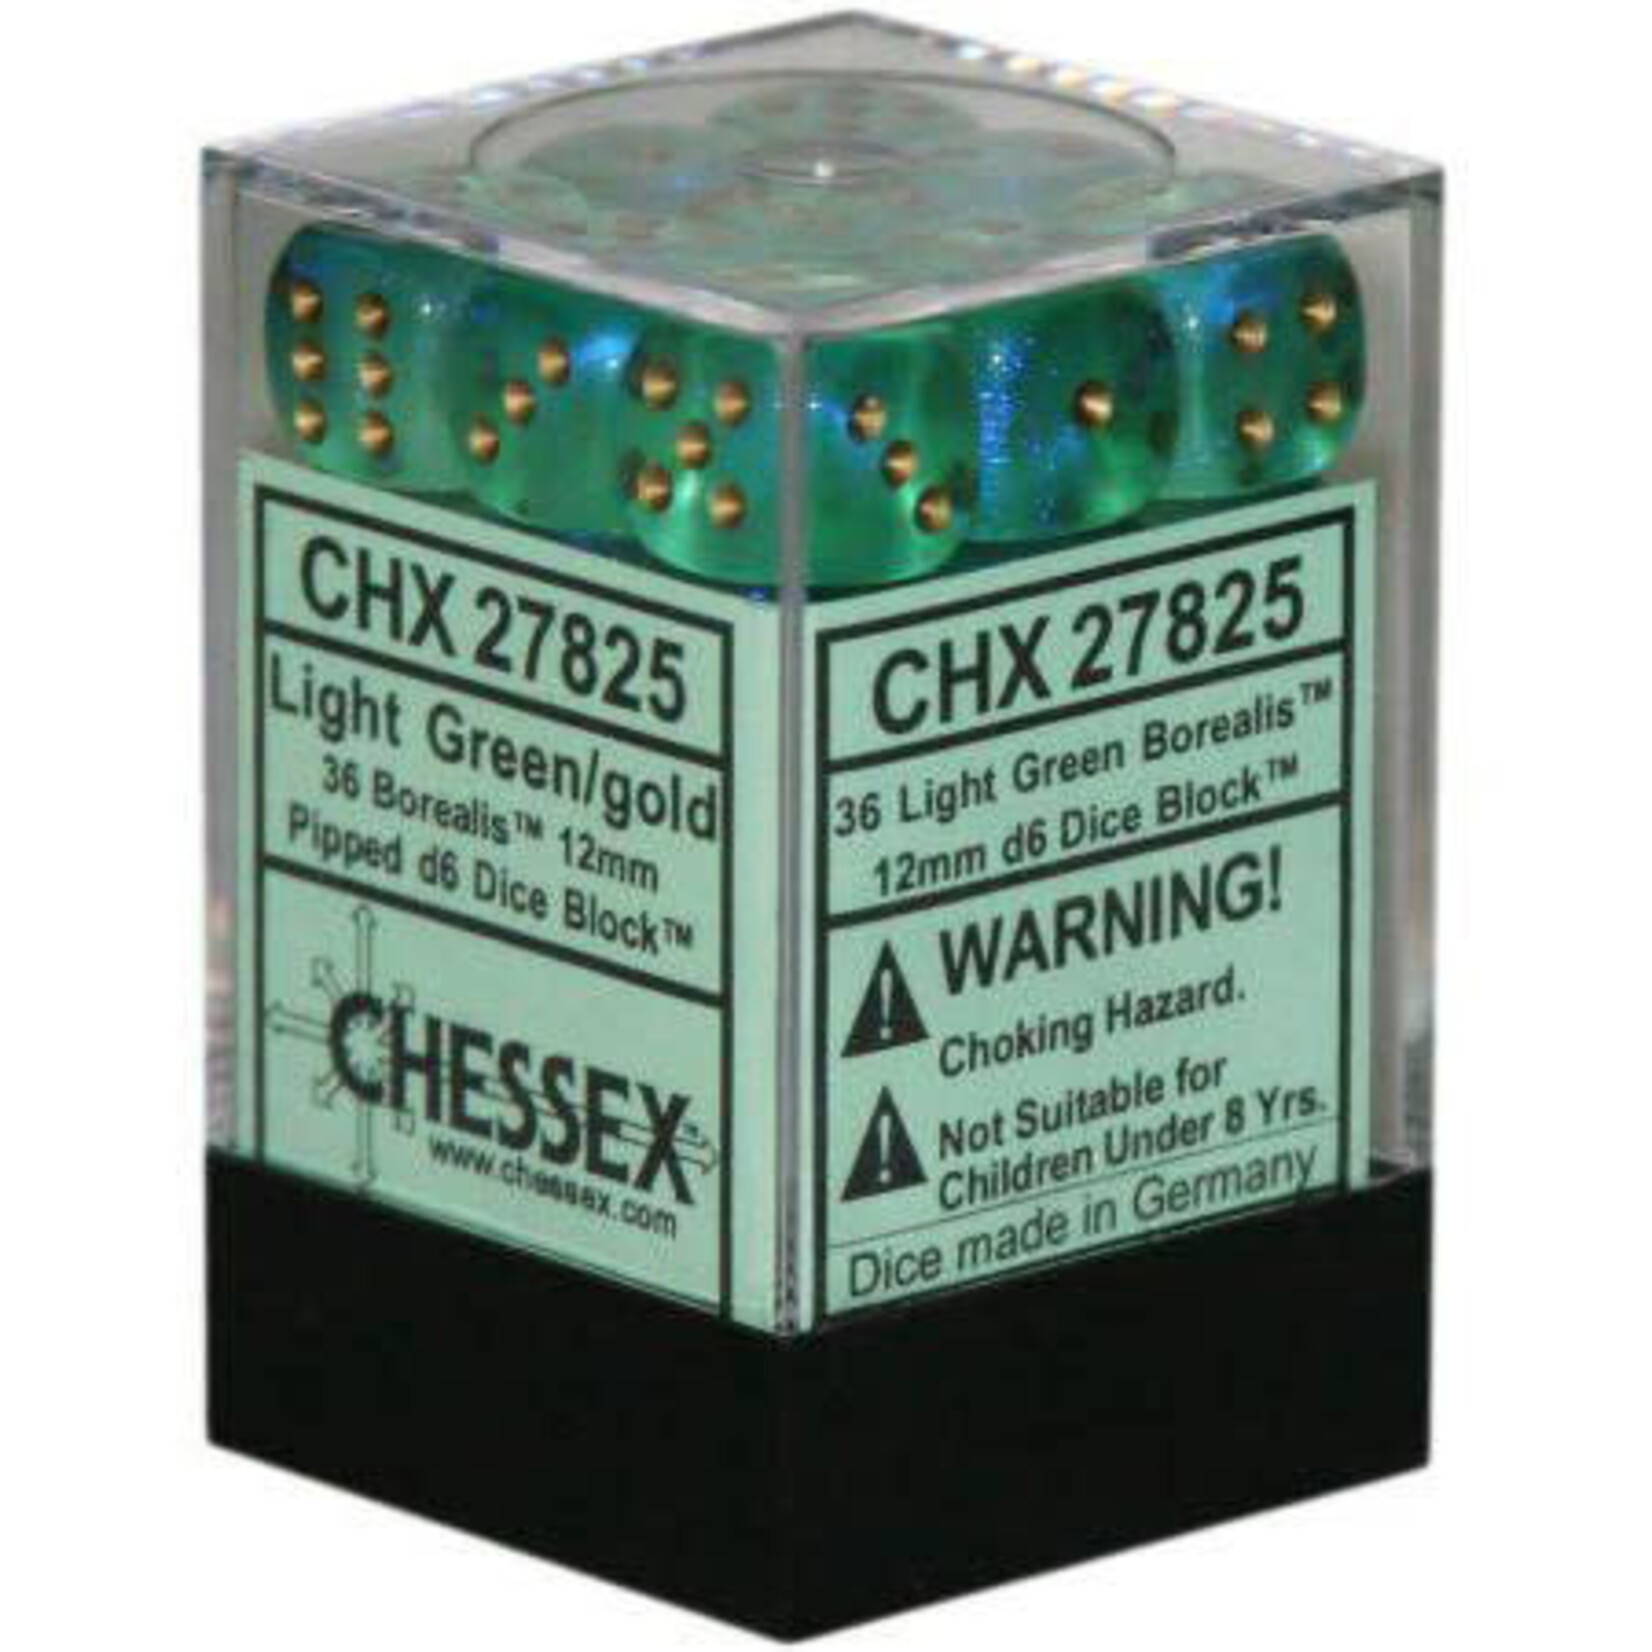 Chessex Borealis® 12mm d6 Light Green/gold Luminary™ Dice Block™ (36 dice)